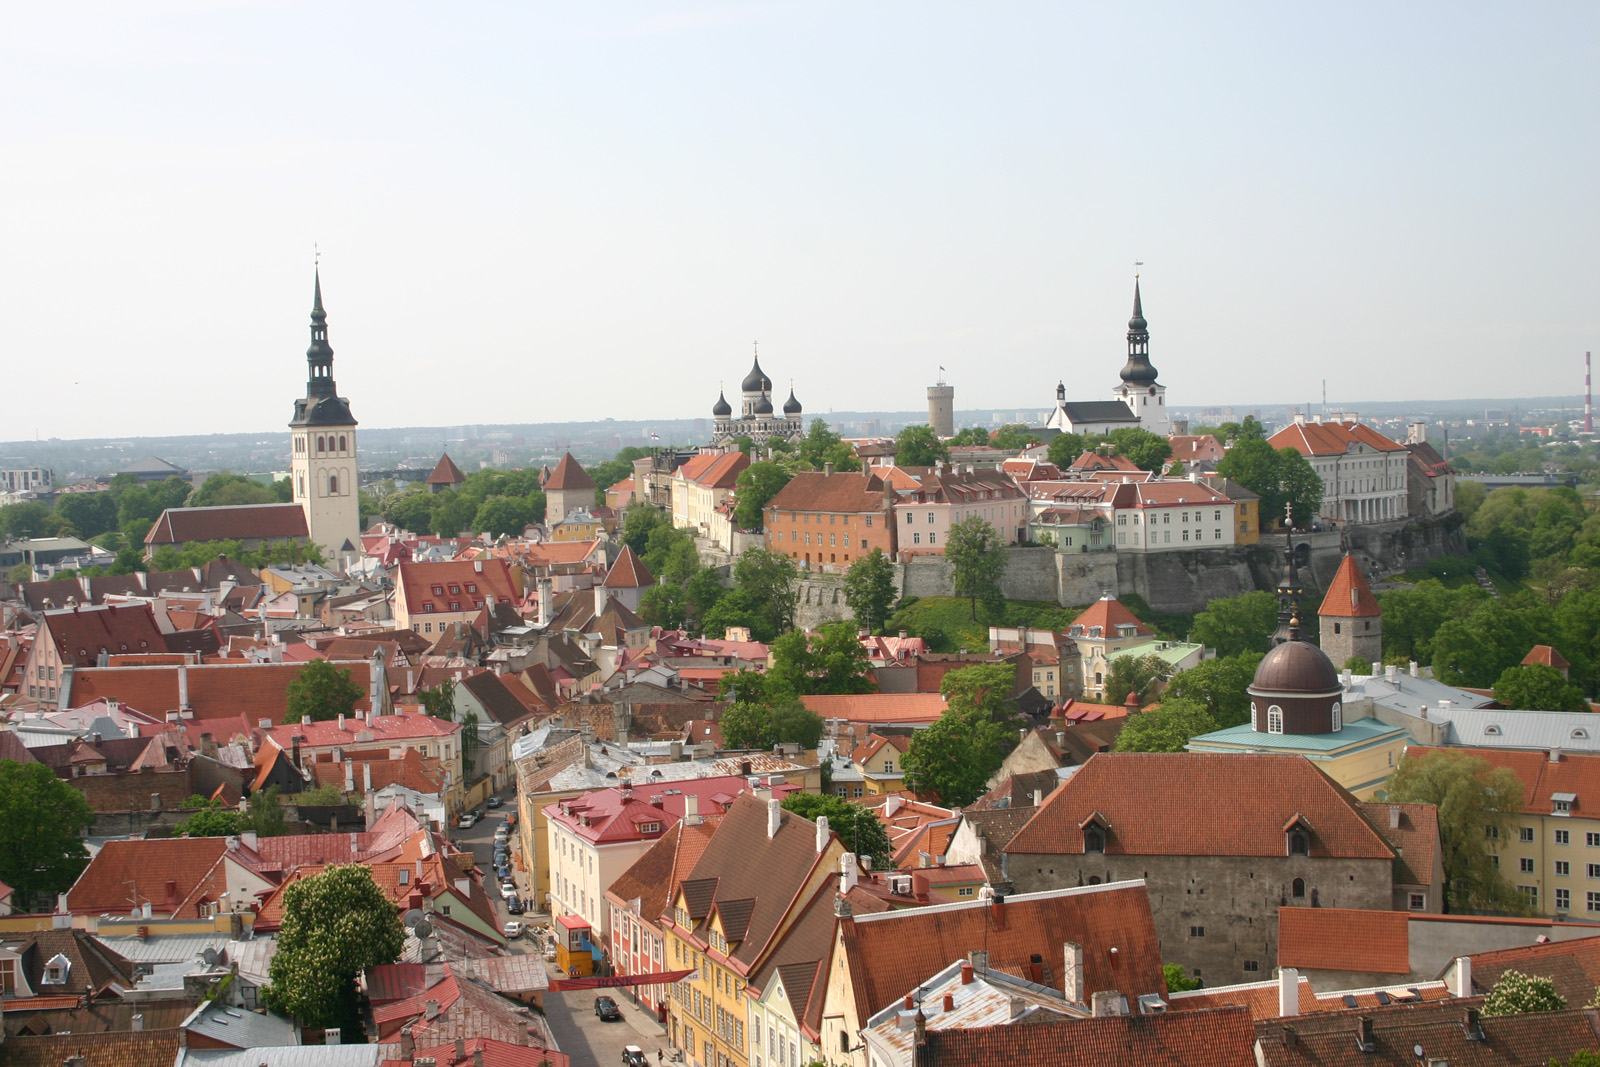 The old city of Tallinn